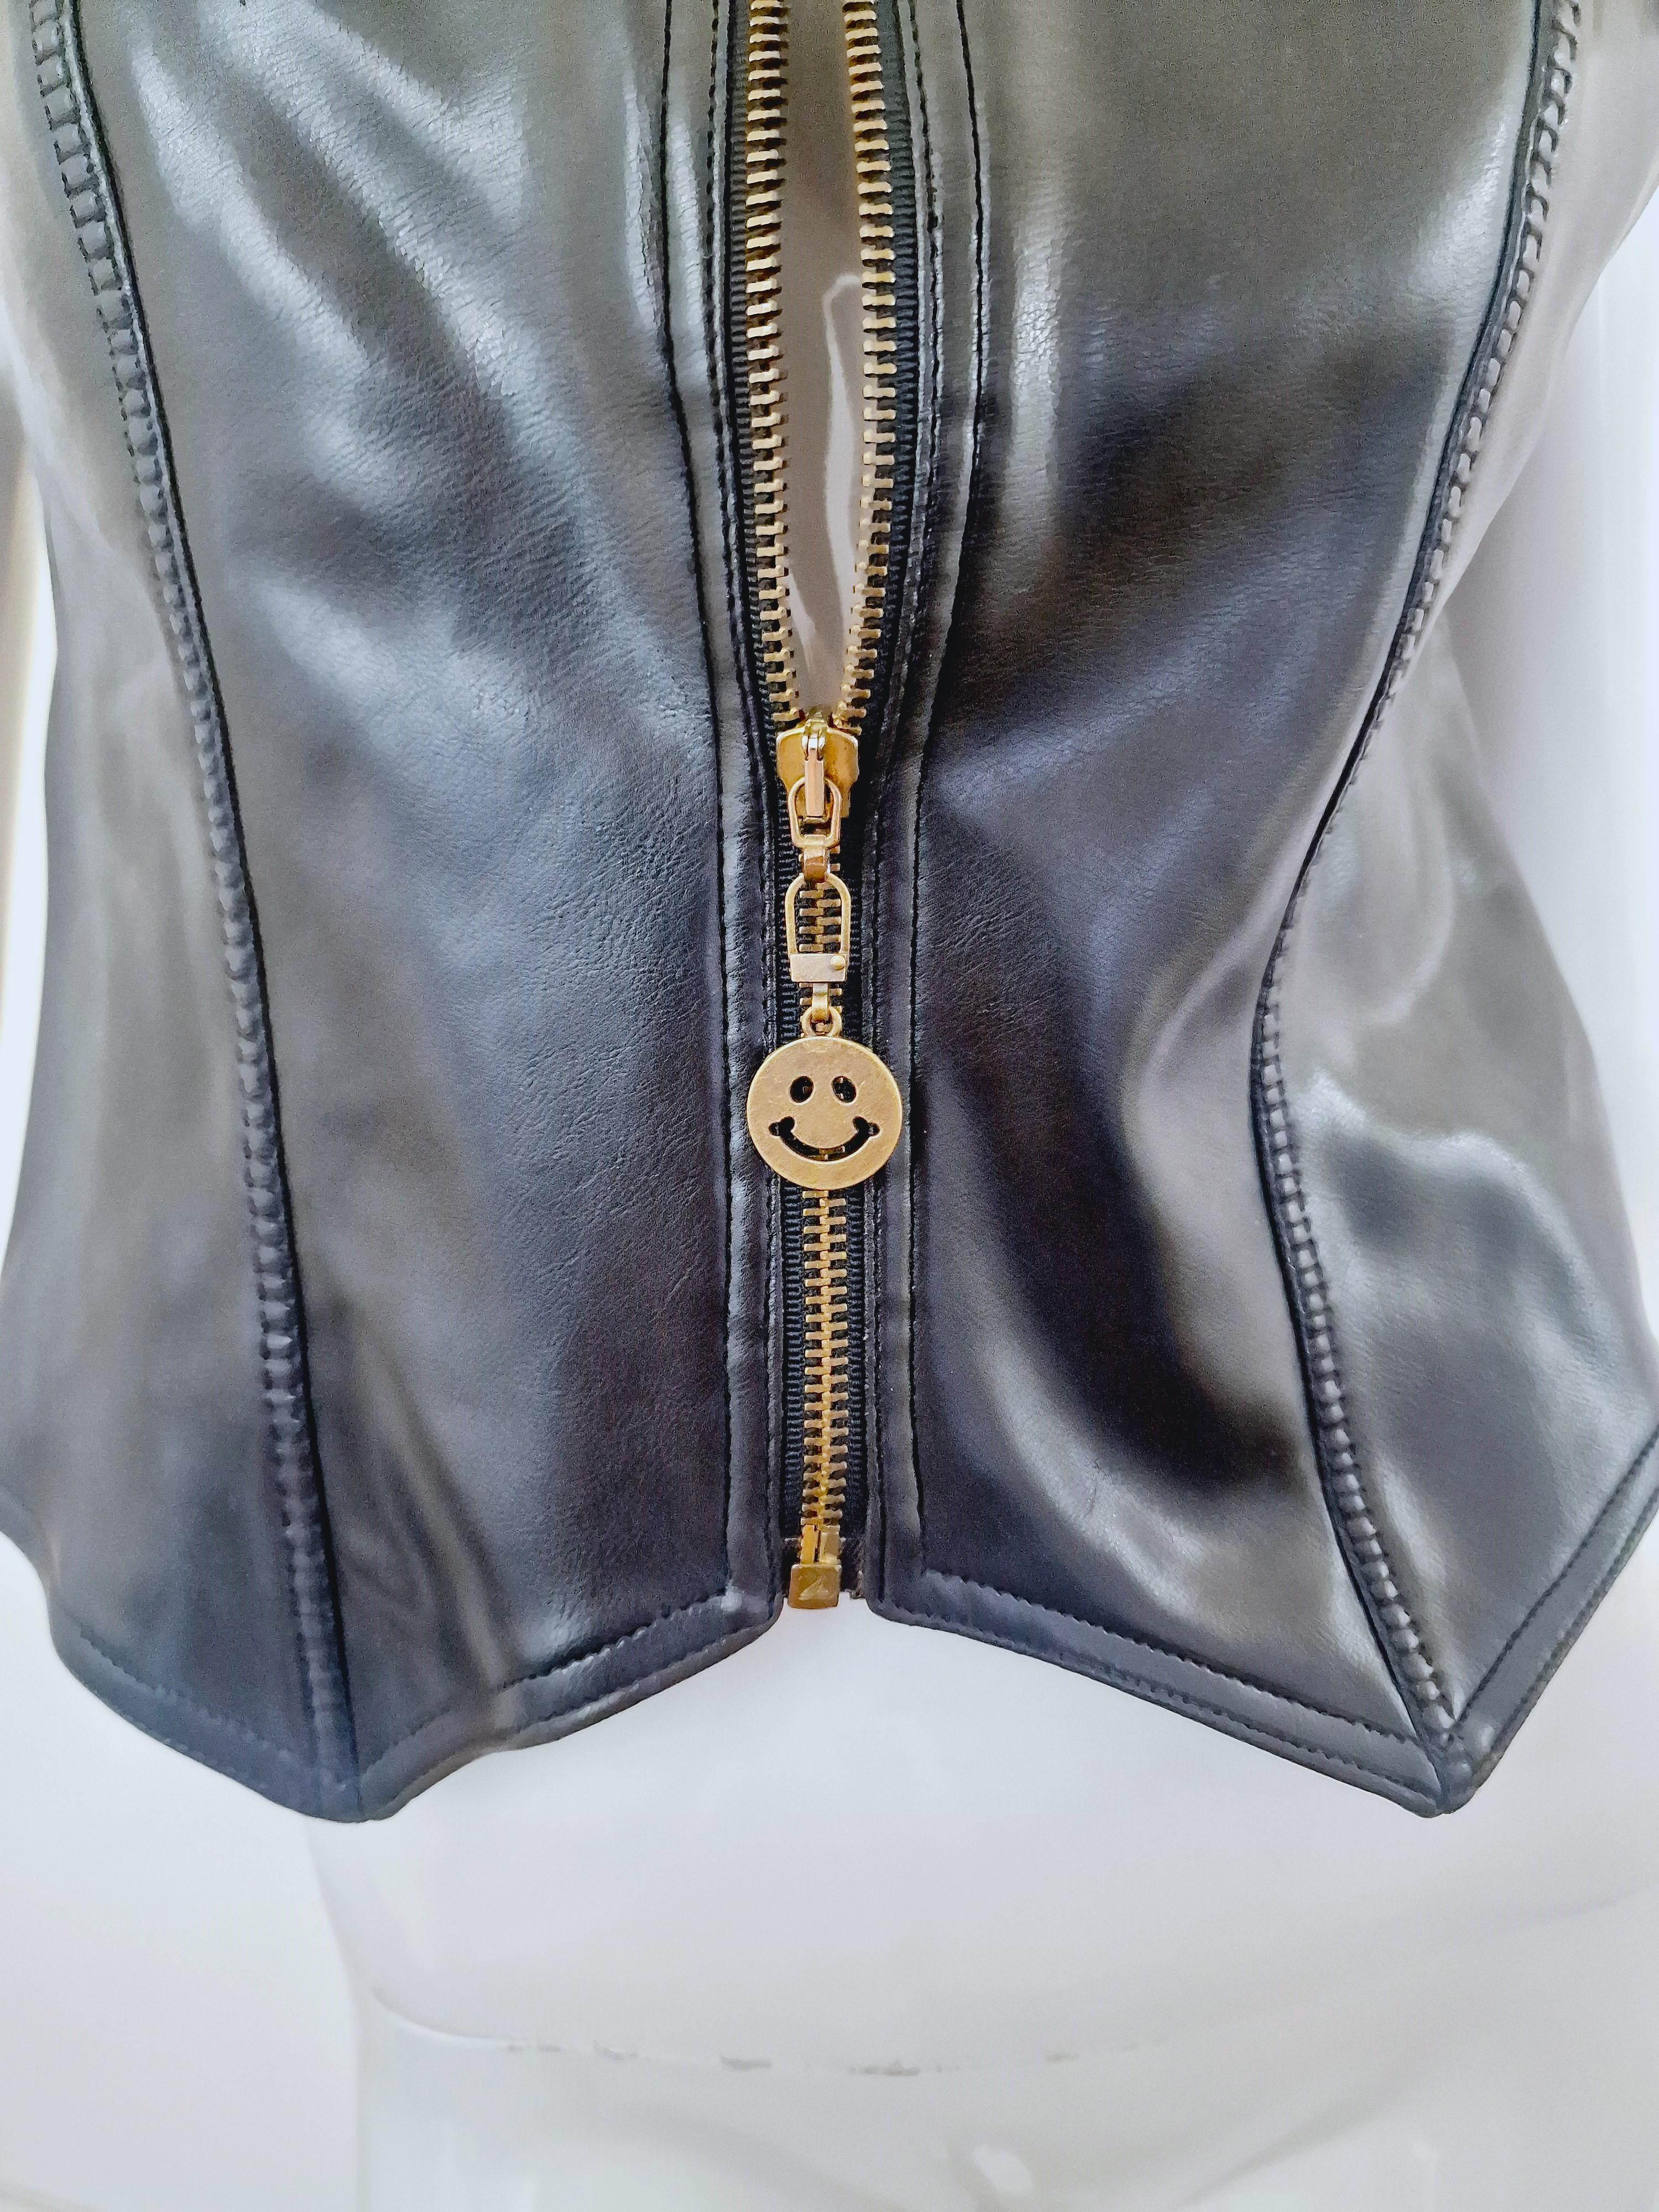 Moschino Faux Leather Biker Peace Sign Zipper Metal Vintage Black Top Vest For Sale 8